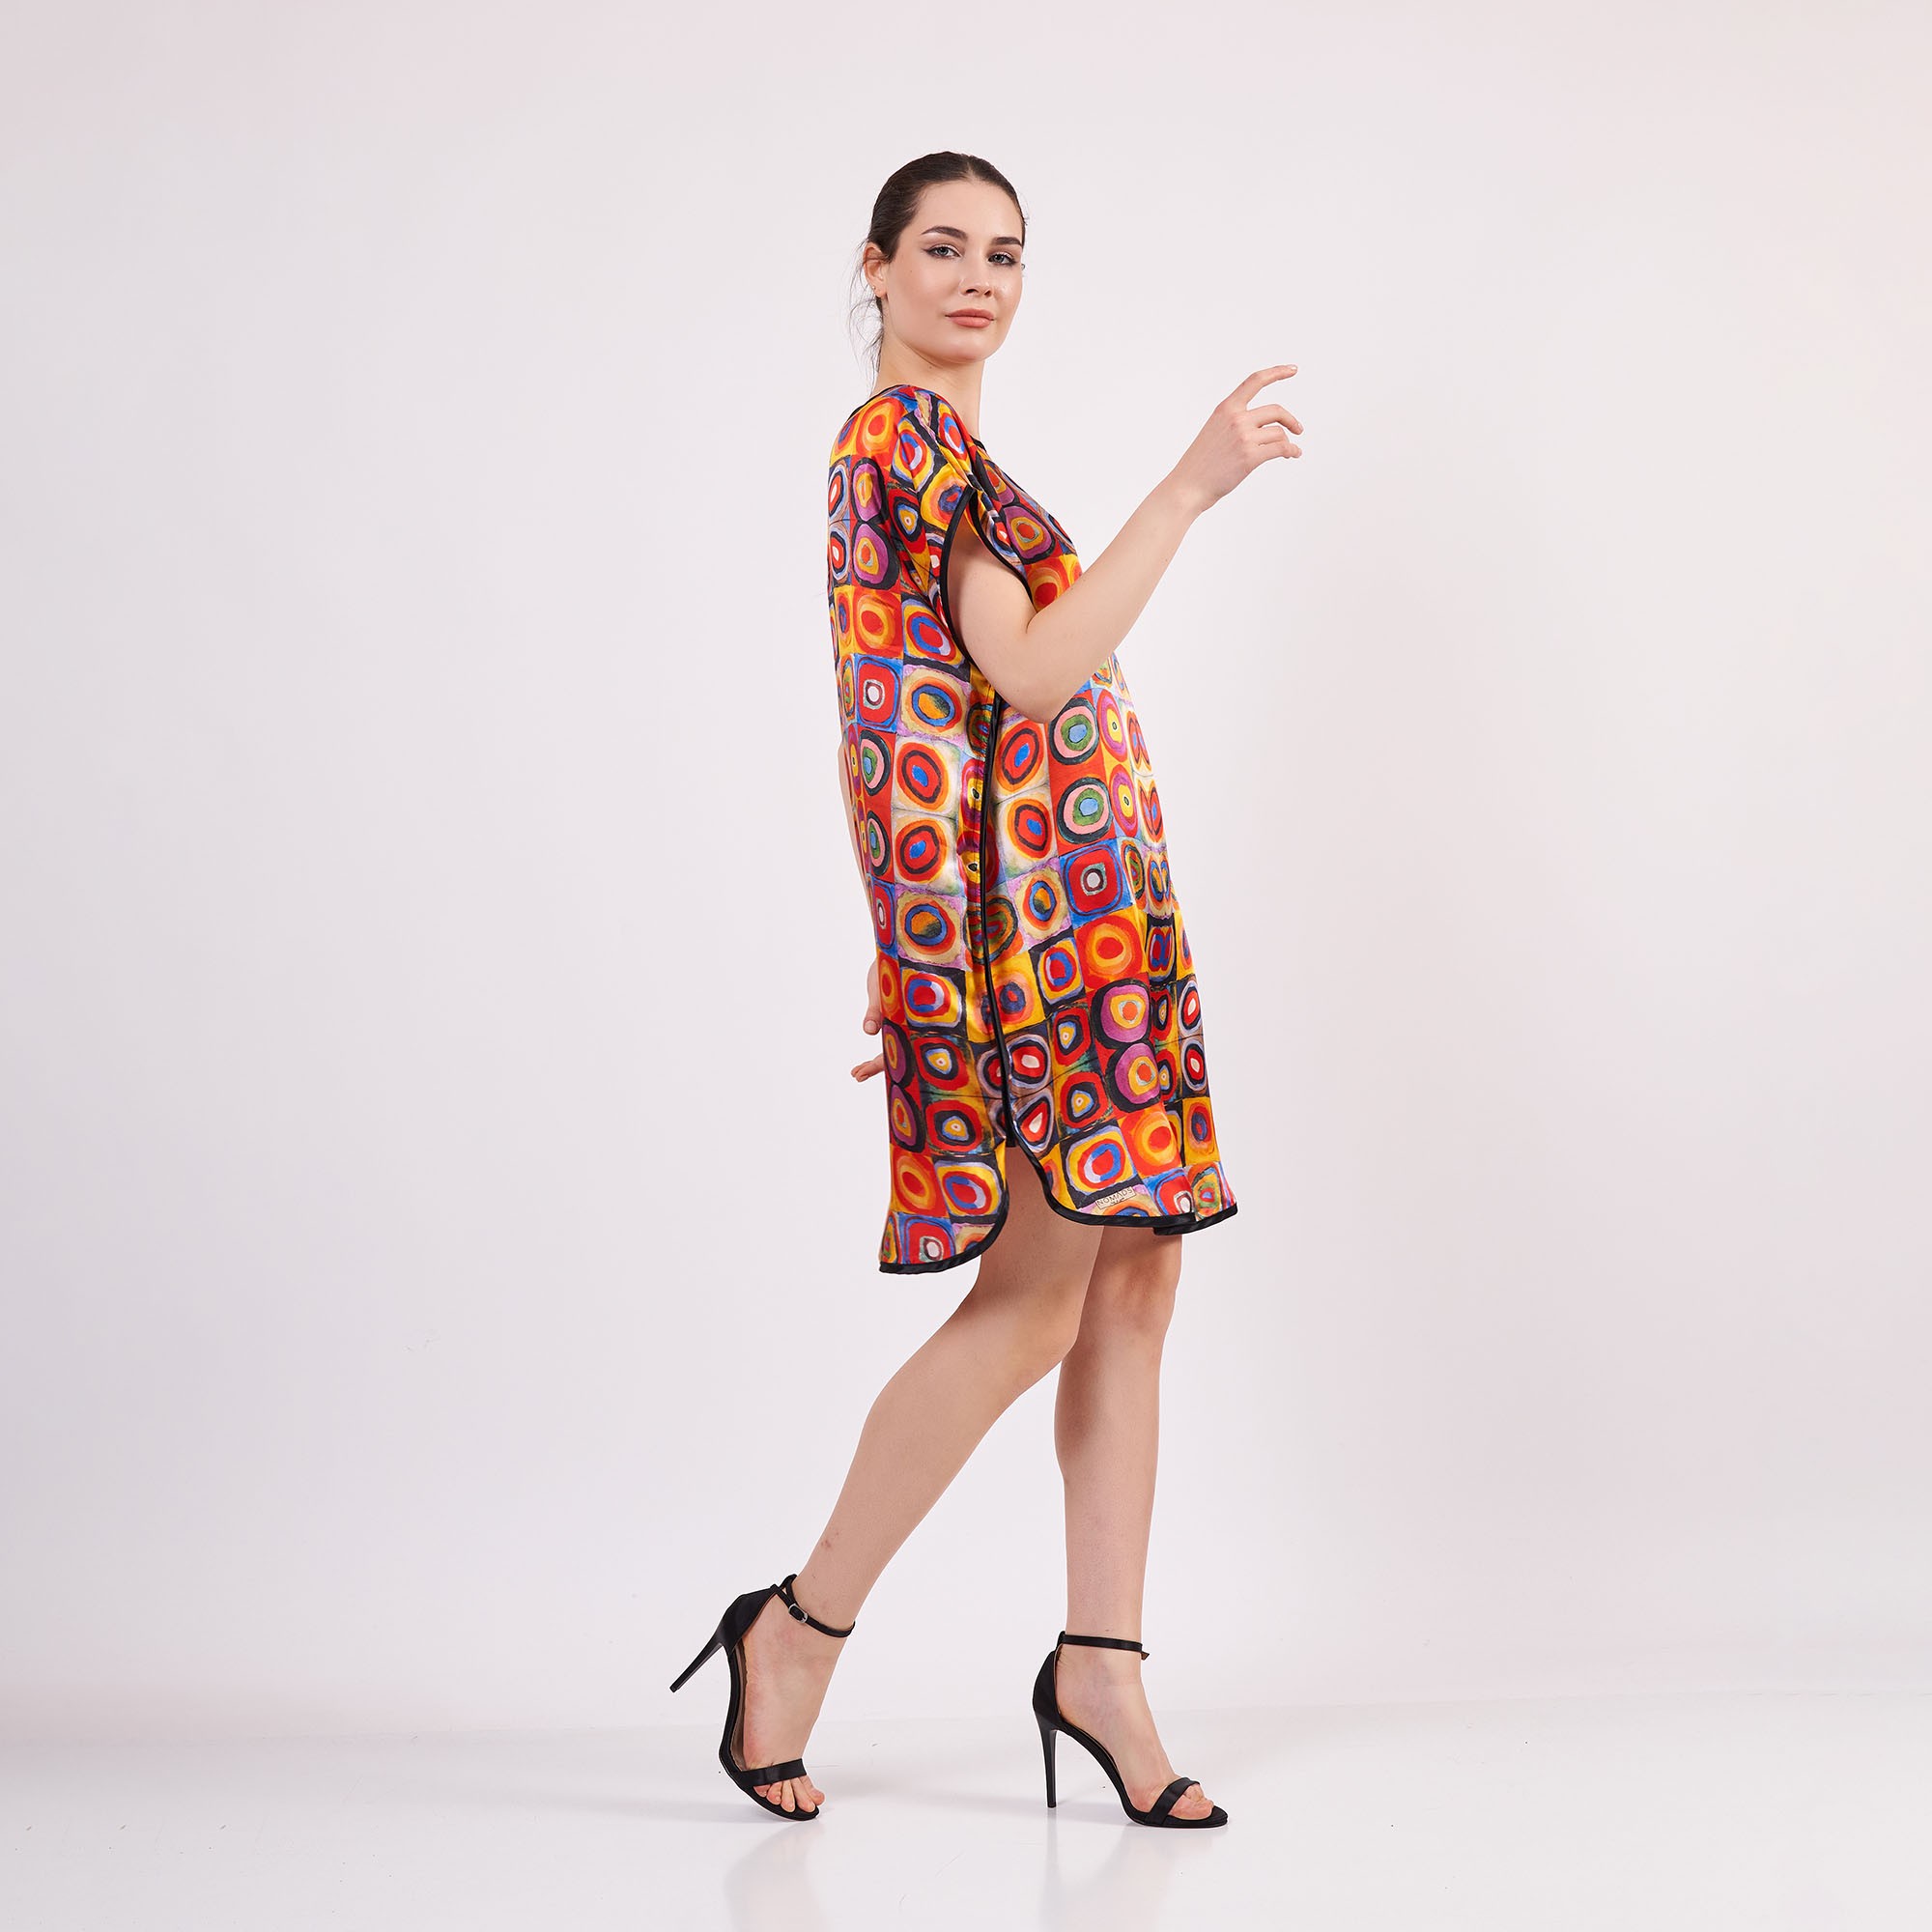 Pure Silk Plus Size Short Dress For Women | Oversized Short Kaftan Kandinsky Squares with Circles | Loose Fitting Dress